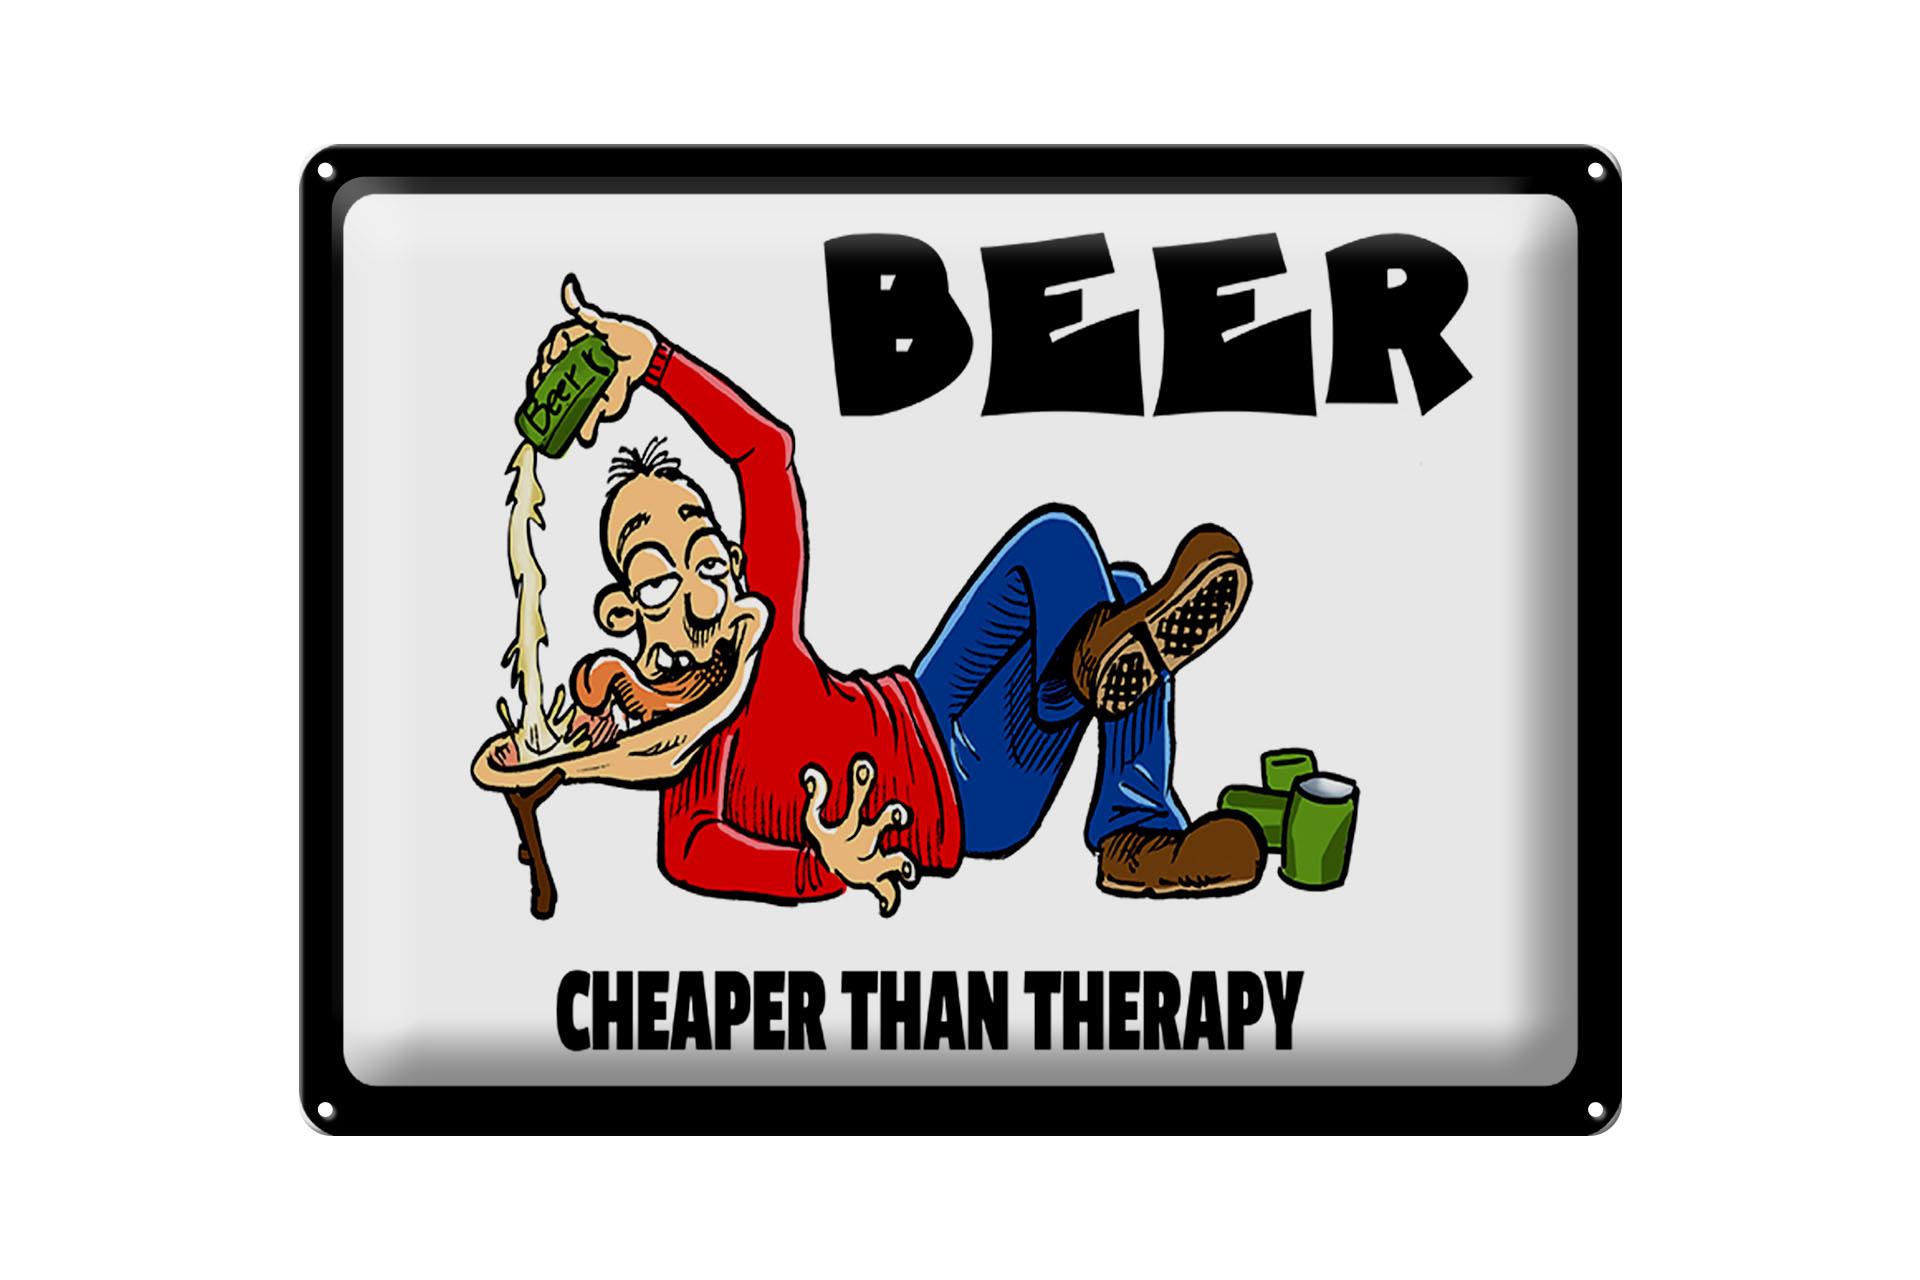 Blechschild Alkohol 40x30 cm Beer cheaper than therapy Bier Deko Schild